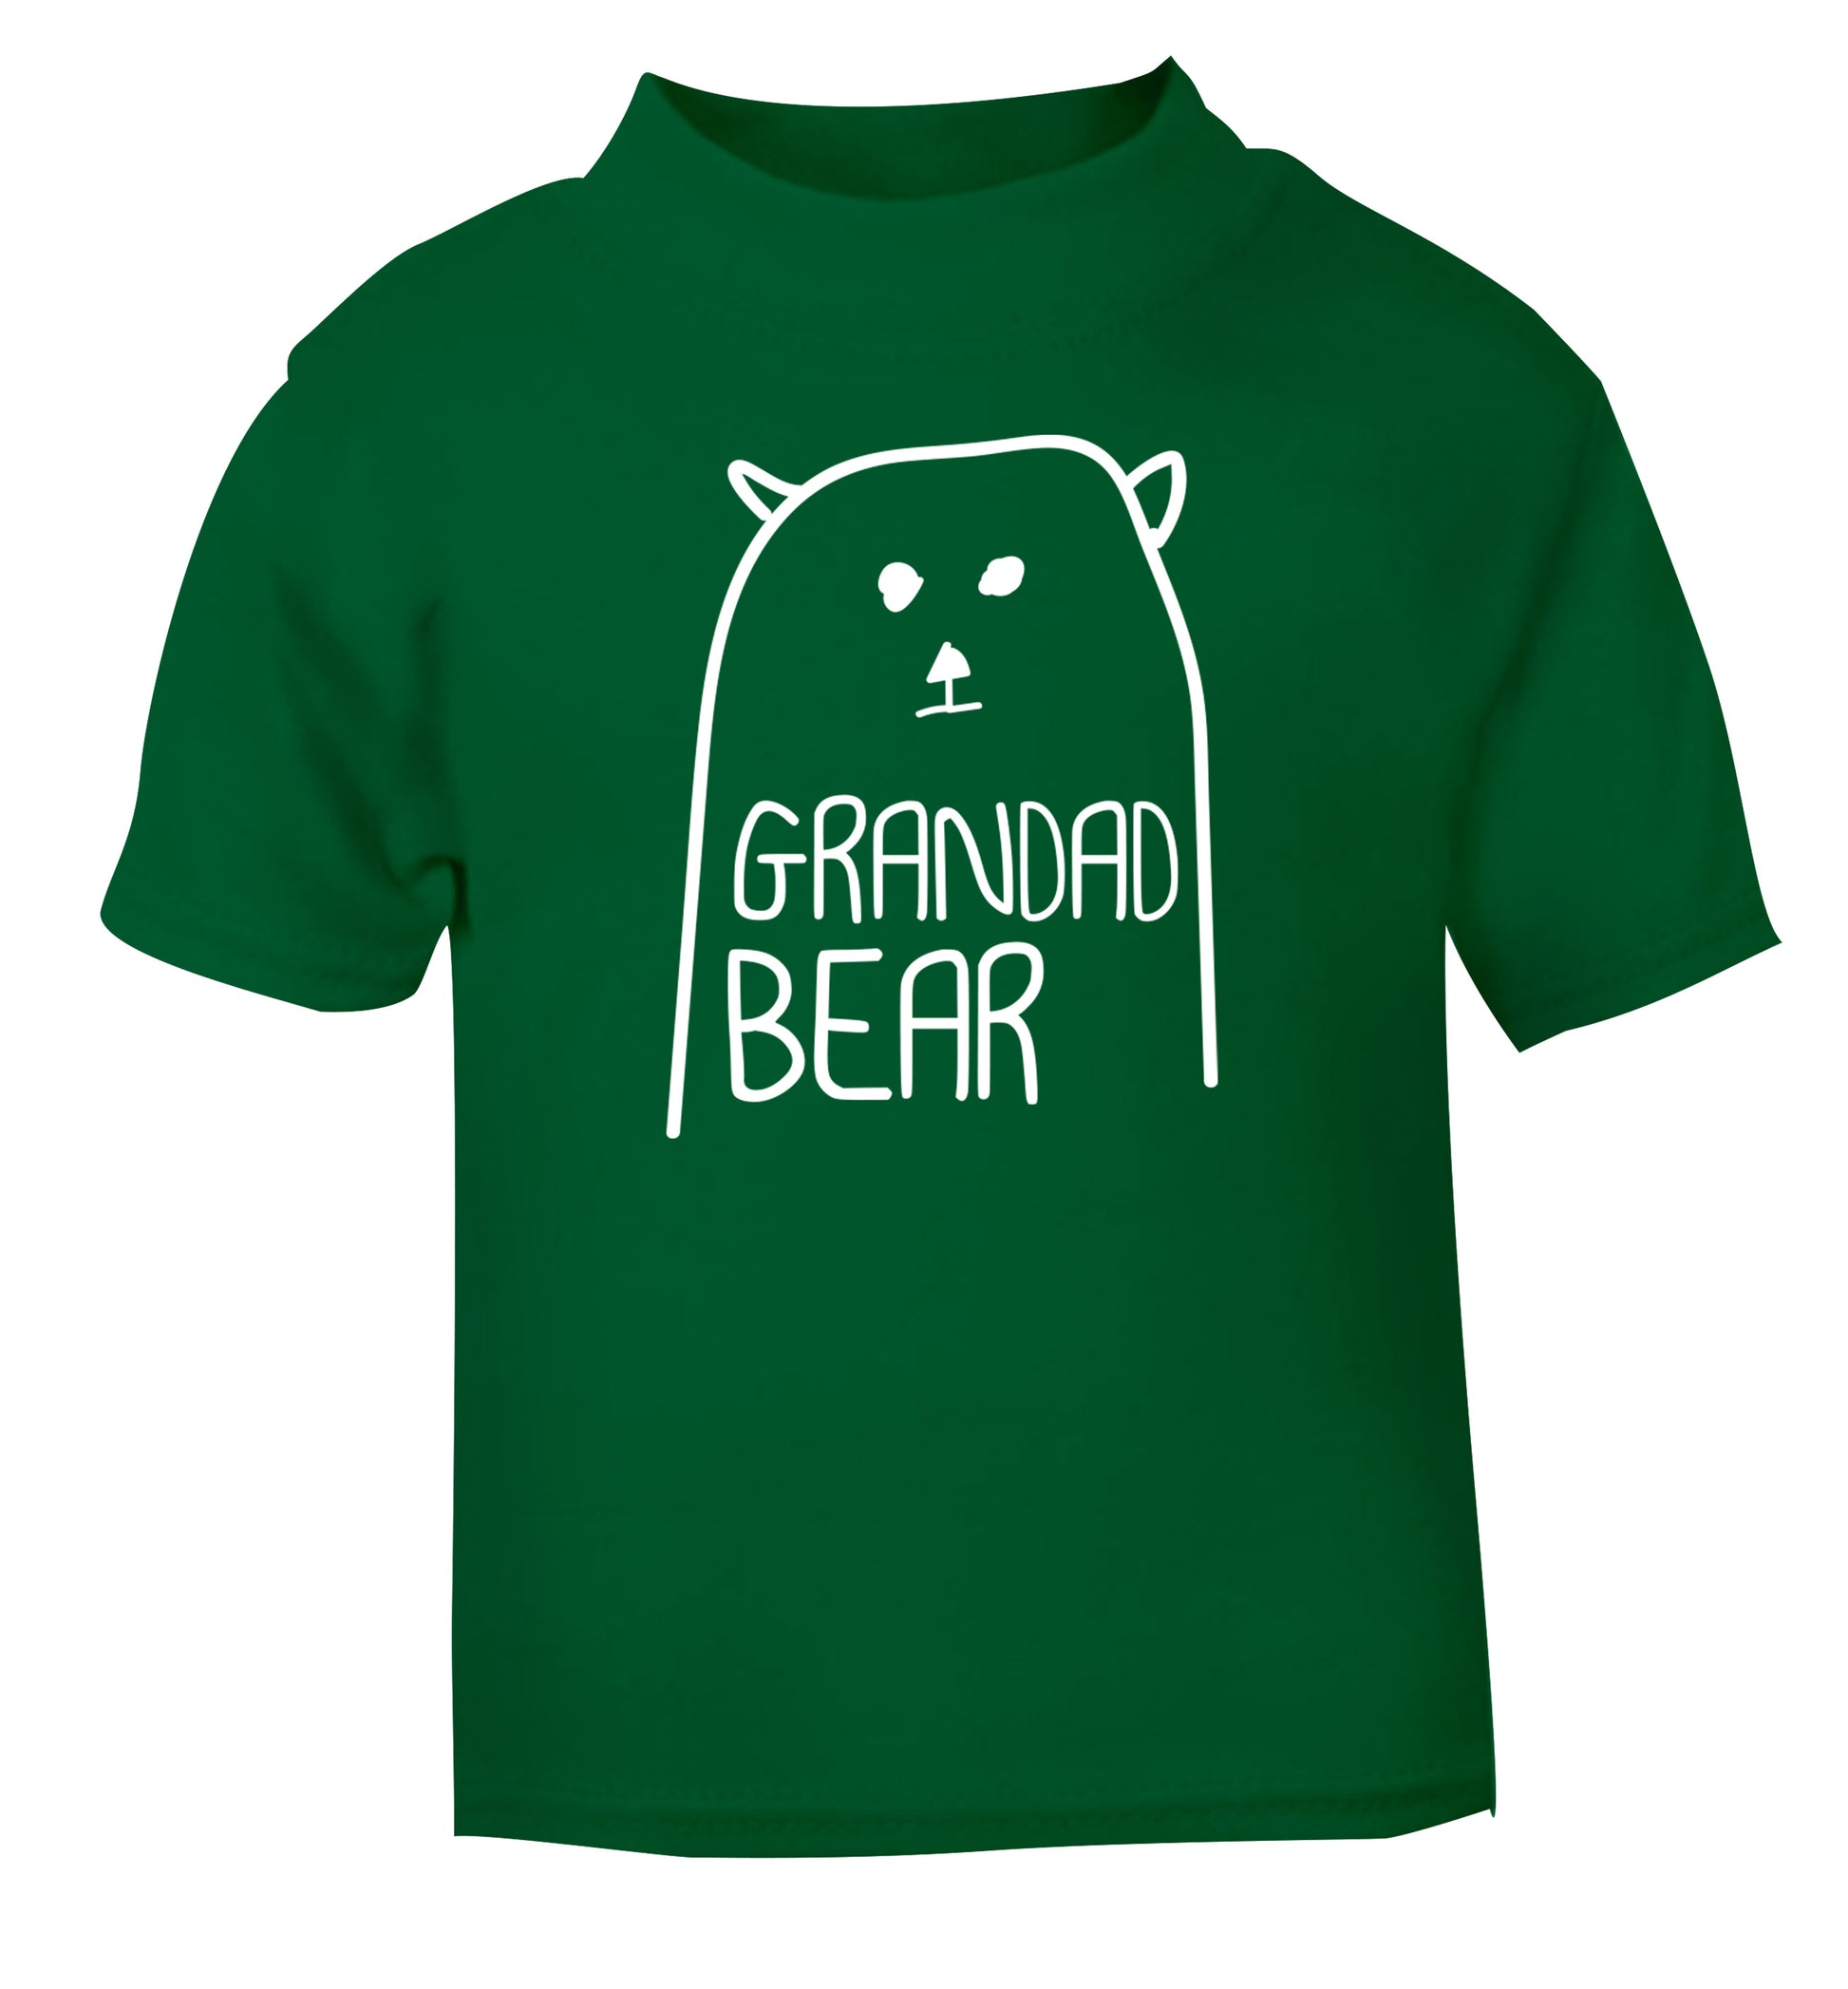 Grandad bear green Baby Toddler Tshirt 2 Years